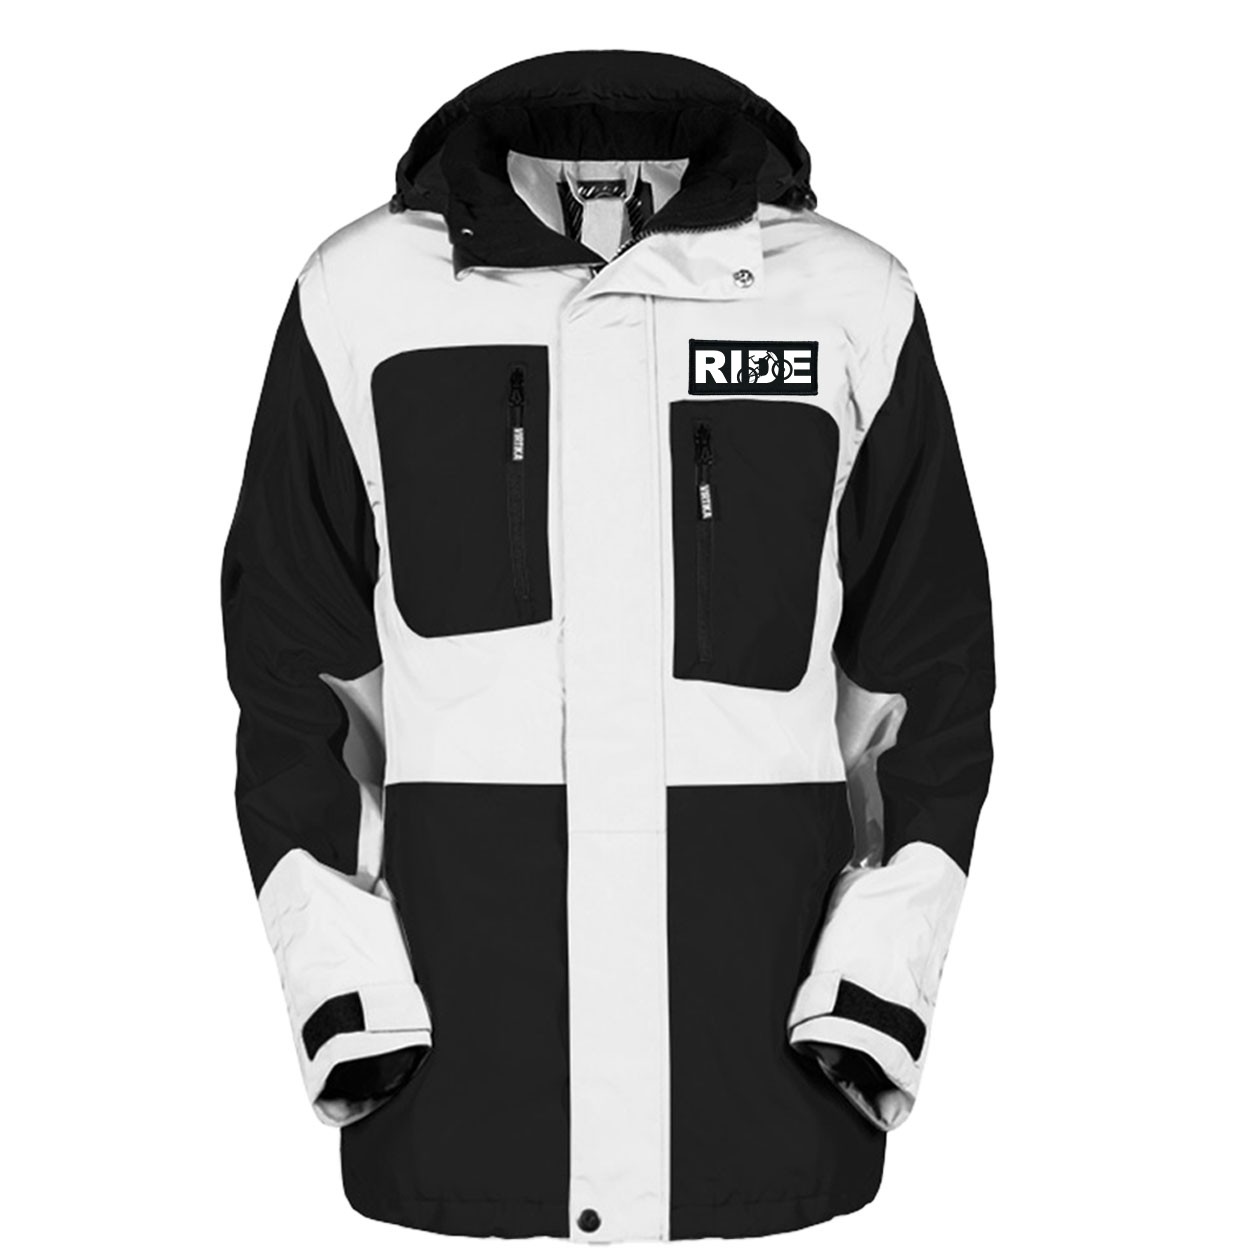 Ride MTB Logo Classic Woven Patch Pro Snowboard Jacket (Black/White)